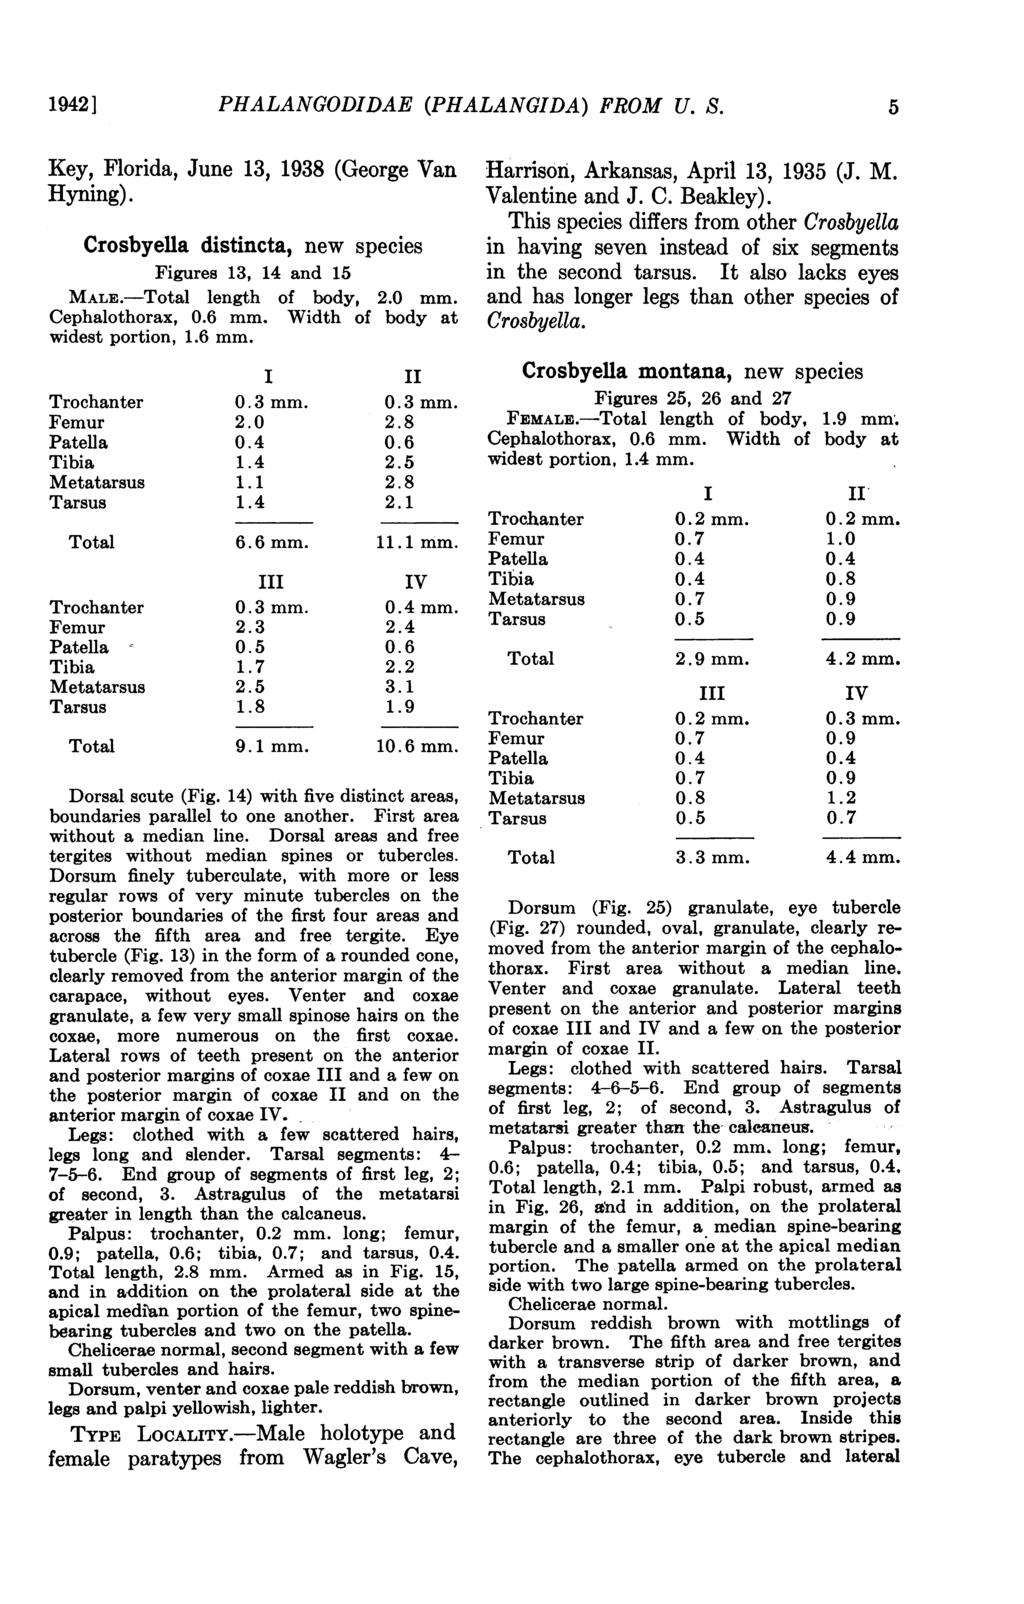 1942] PHALANGODDAE (PHALANGDA) FROM U. S. 5 Key, Florida, June 13, 1938 (George Van Hyning). Crosbyella distincta, Figures 13, 14 and 15 new species MALE.- length of body, 2.0 mm. Cephalothorax, mm.